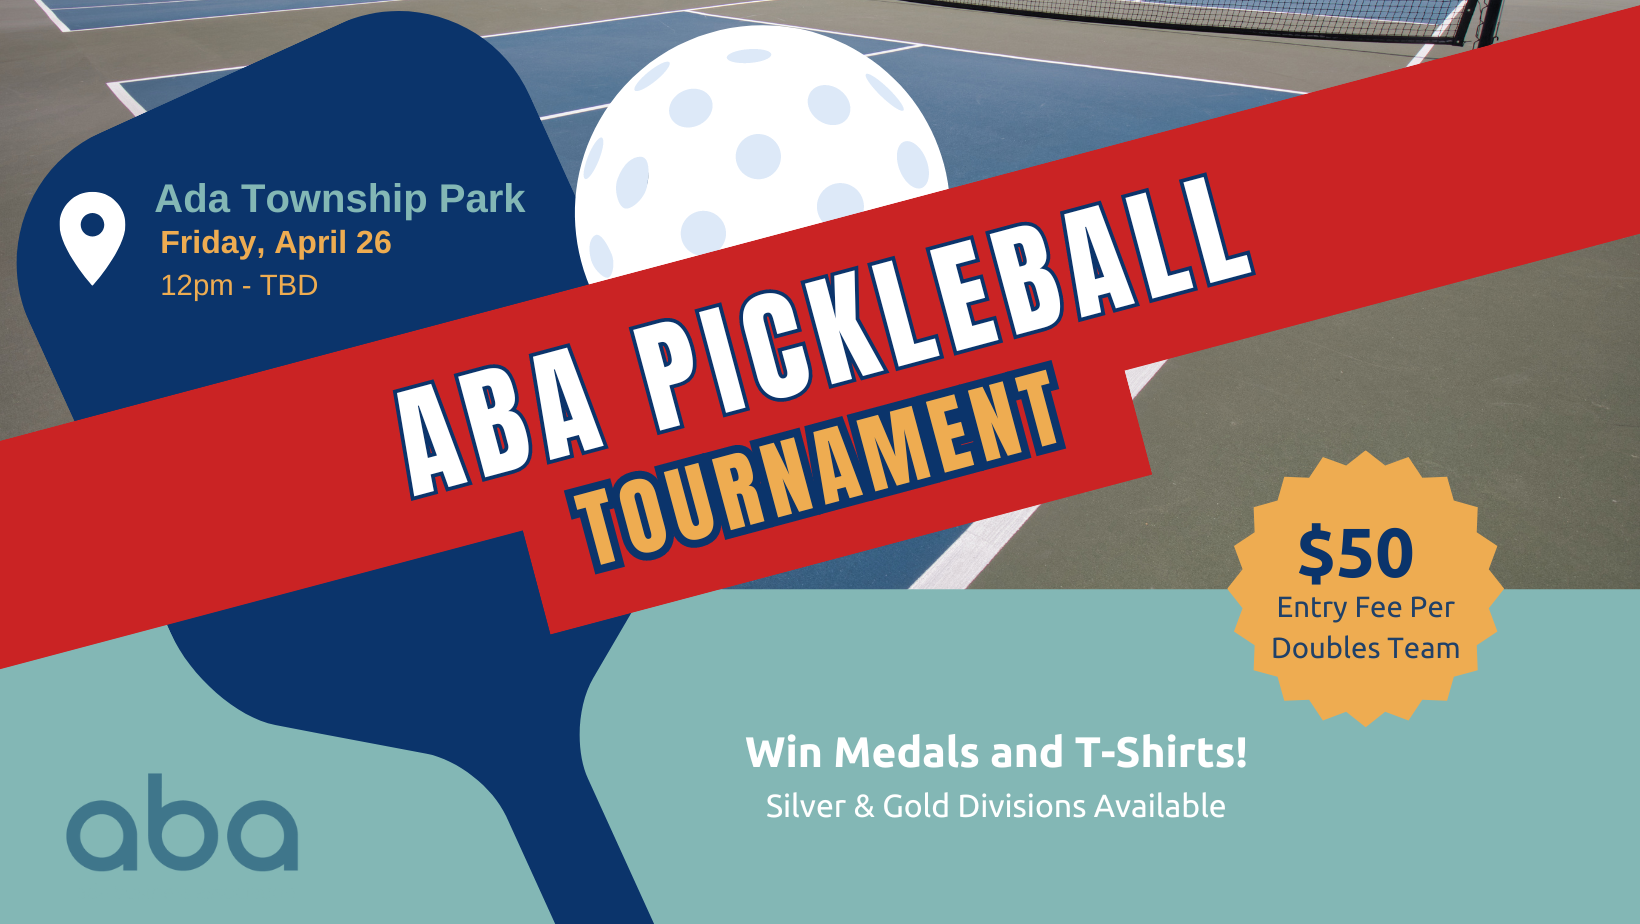 ABA Pickleball Tournament FB Event